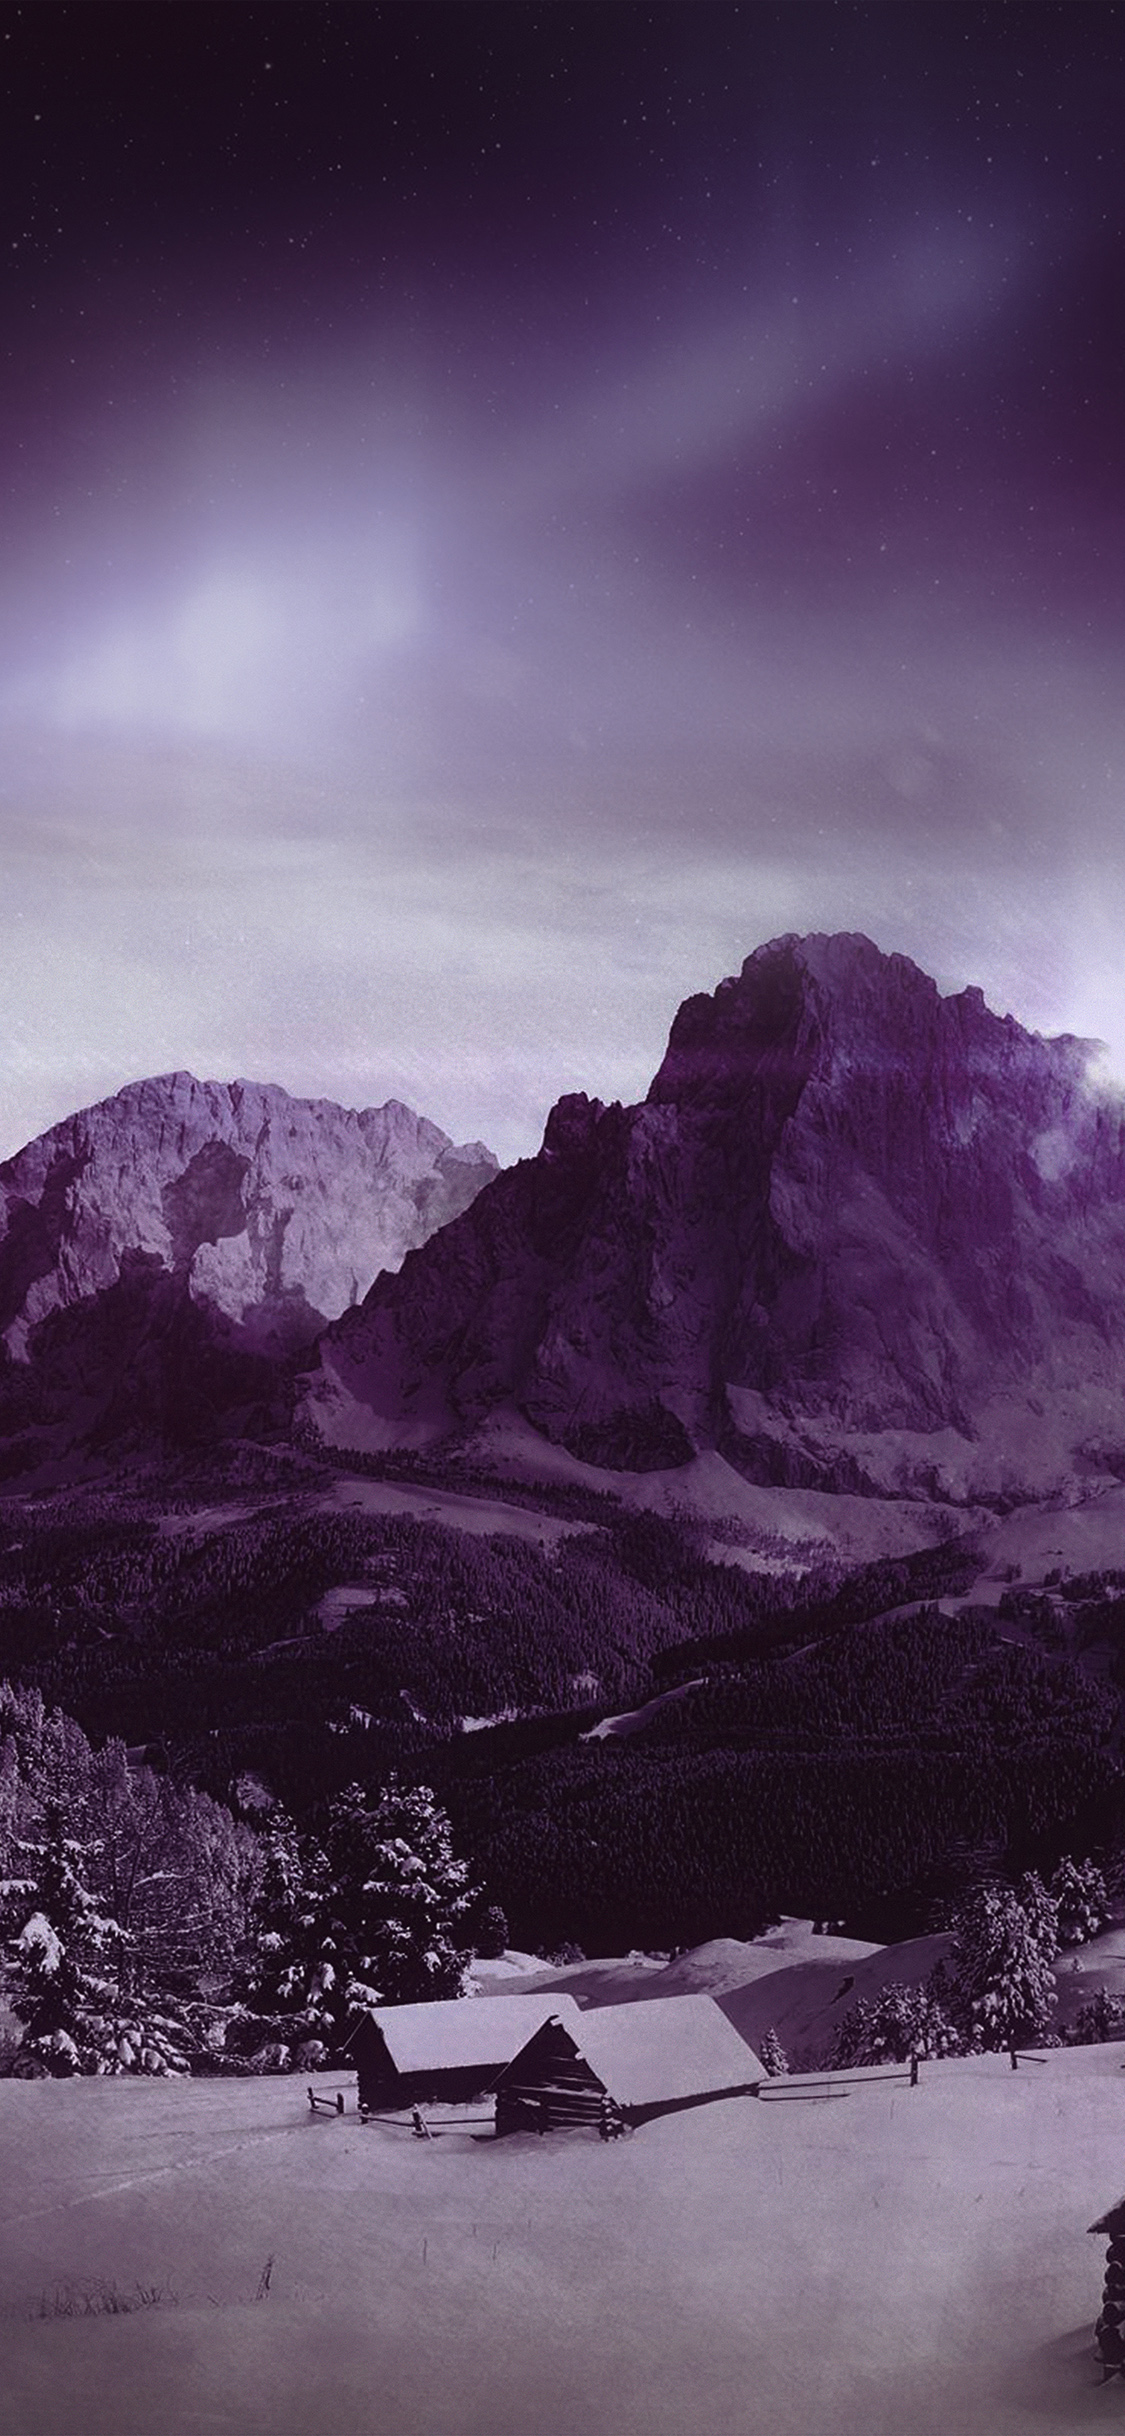 iPhone X wallpaper. night sky mountain snow winter aurora purple